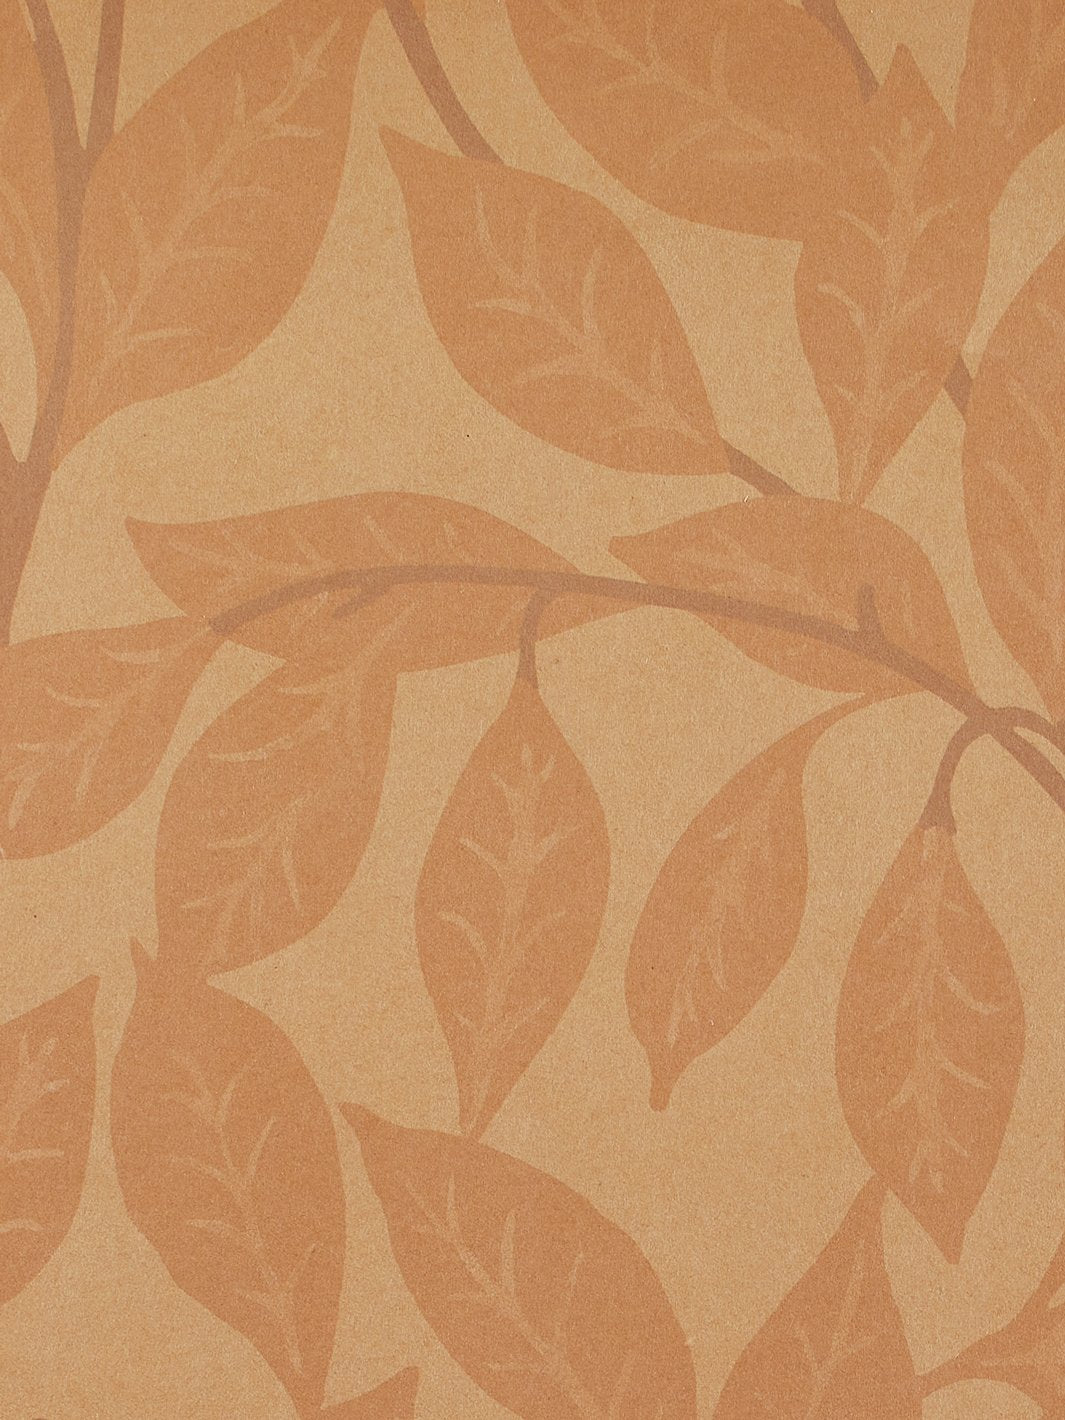 'Orchard Leaves' Kraft' Wallpaper by Wallshoppe - Blush